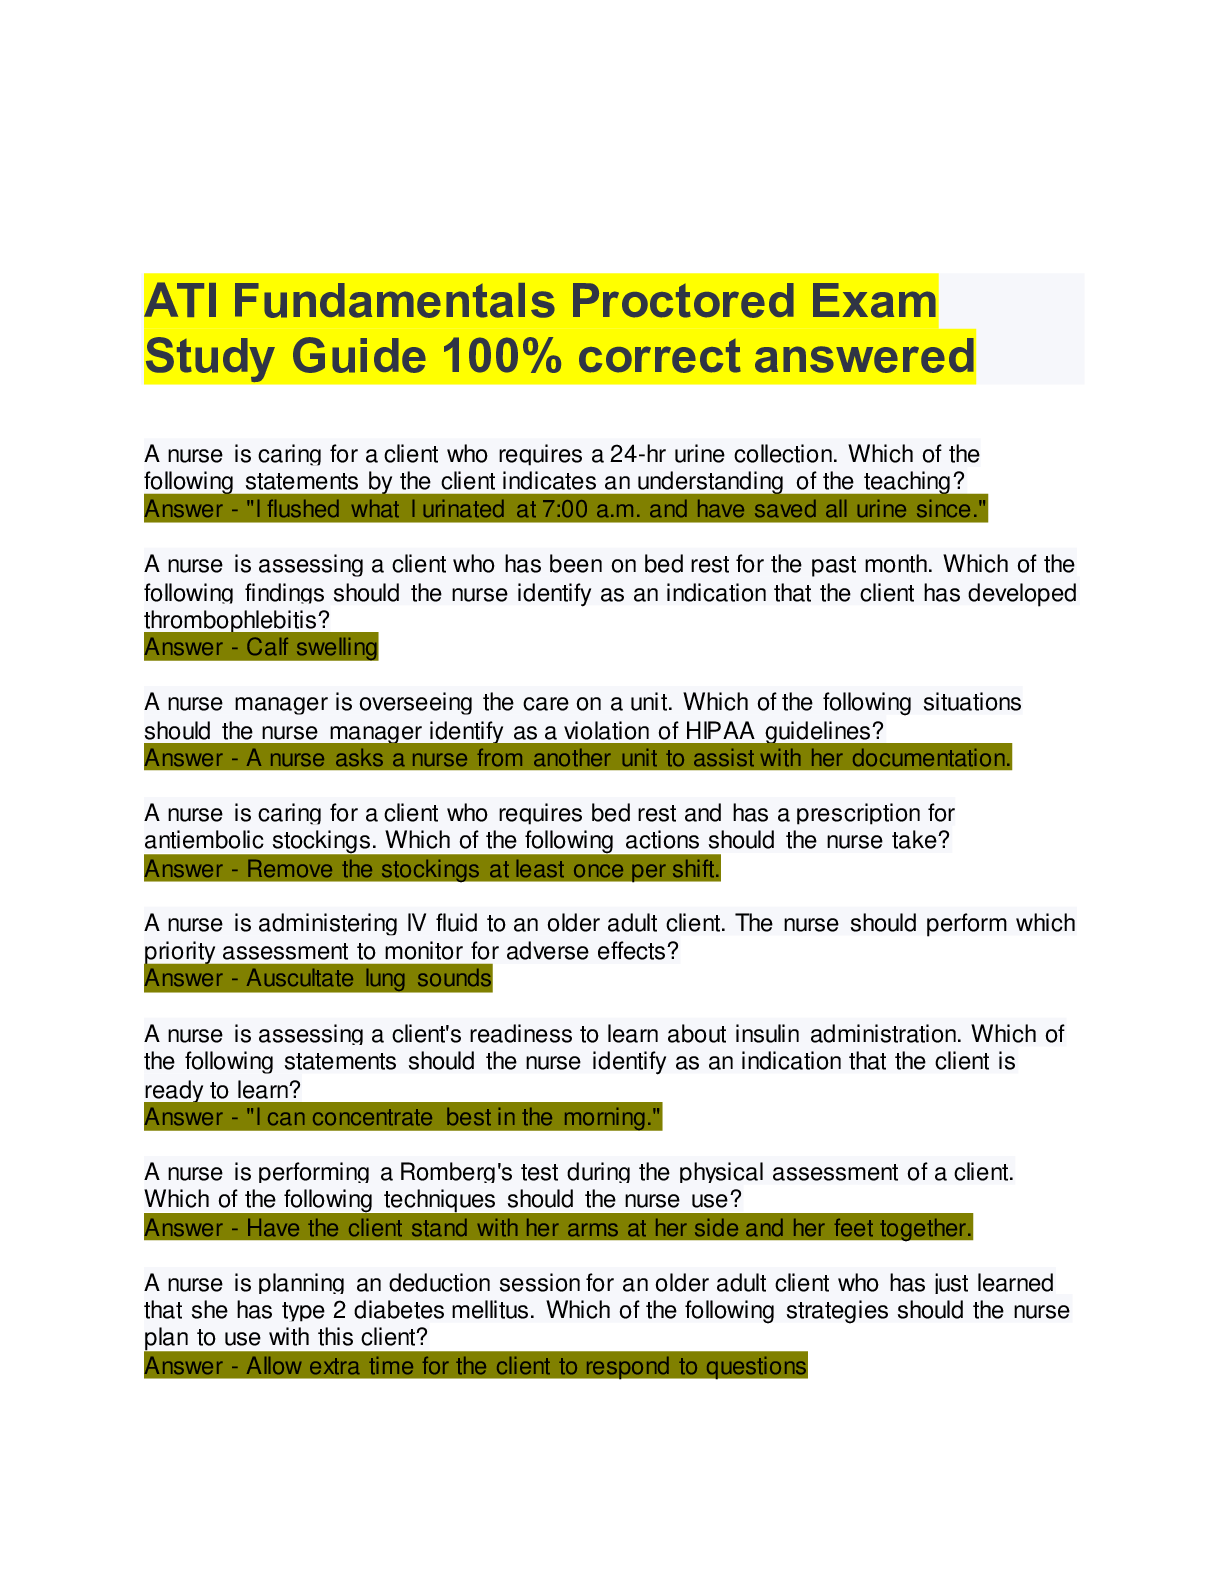 ATI Fundamentals Proctored Exam Study Guide 100 correct answered